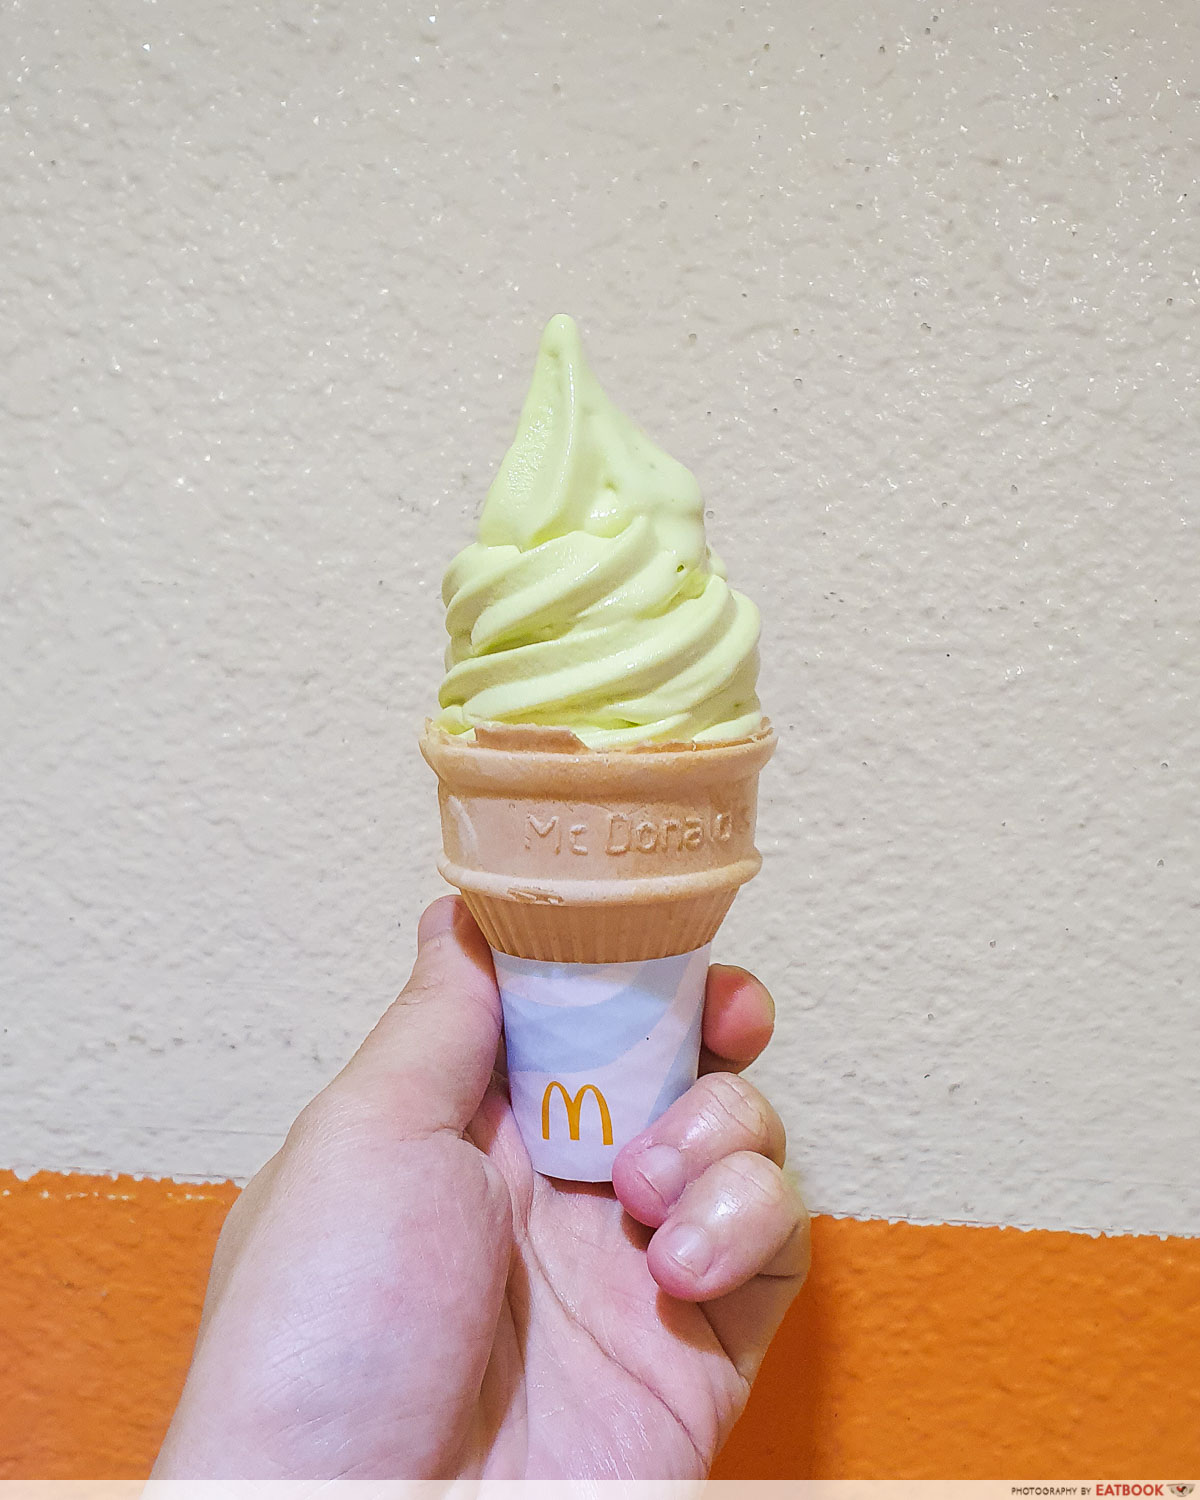 mcdonalds pandan ice cream - ice cream cone